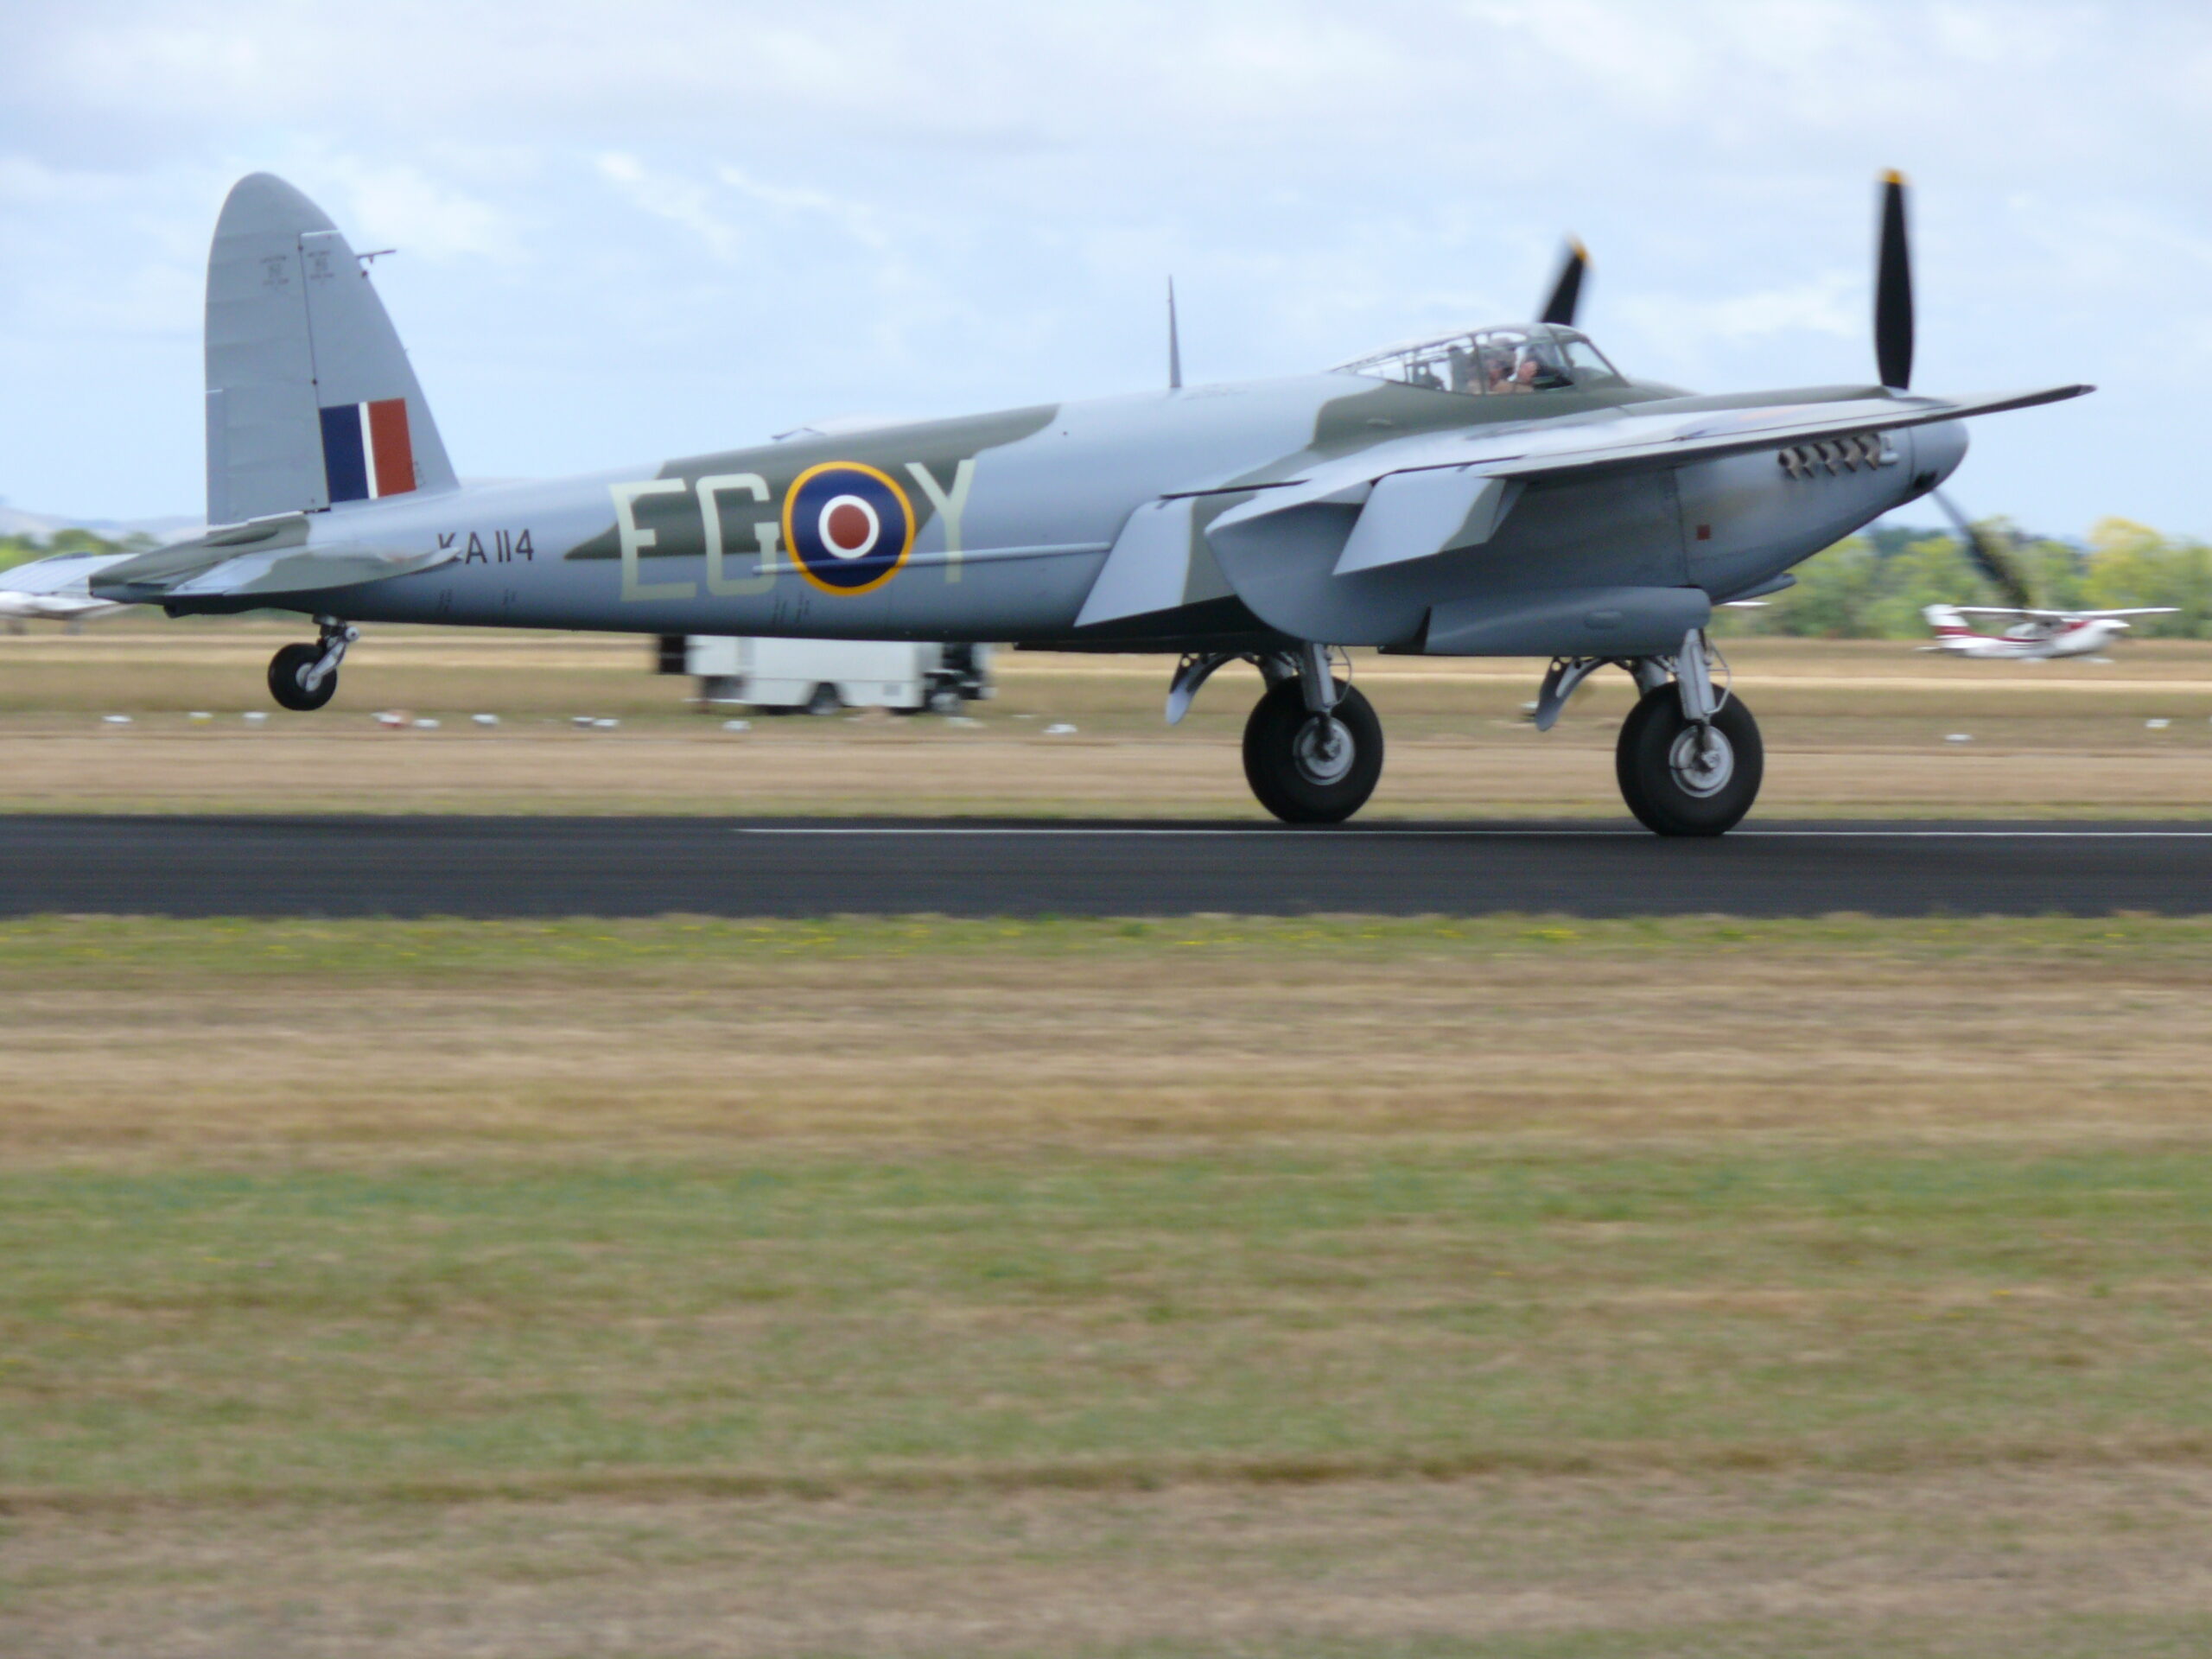 De_Havilland Mosquito bomber